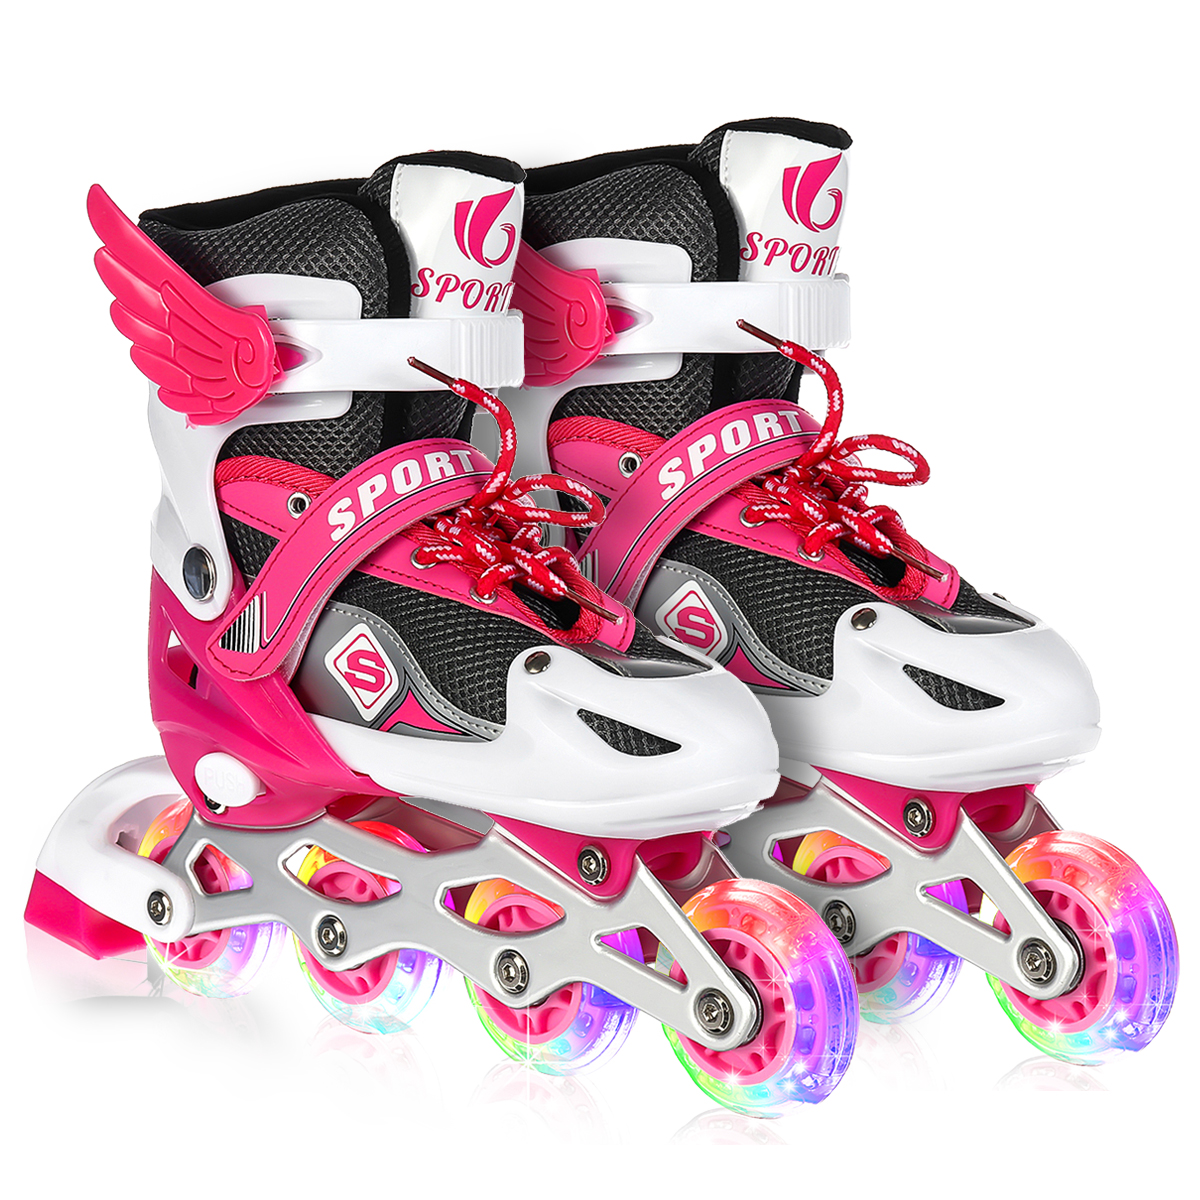 Kids-Inline-Skates-Adjustable-Illuminating-Roller-Skating-Shoes-Sliding-Free-Skating-Sneakers-1859309-8